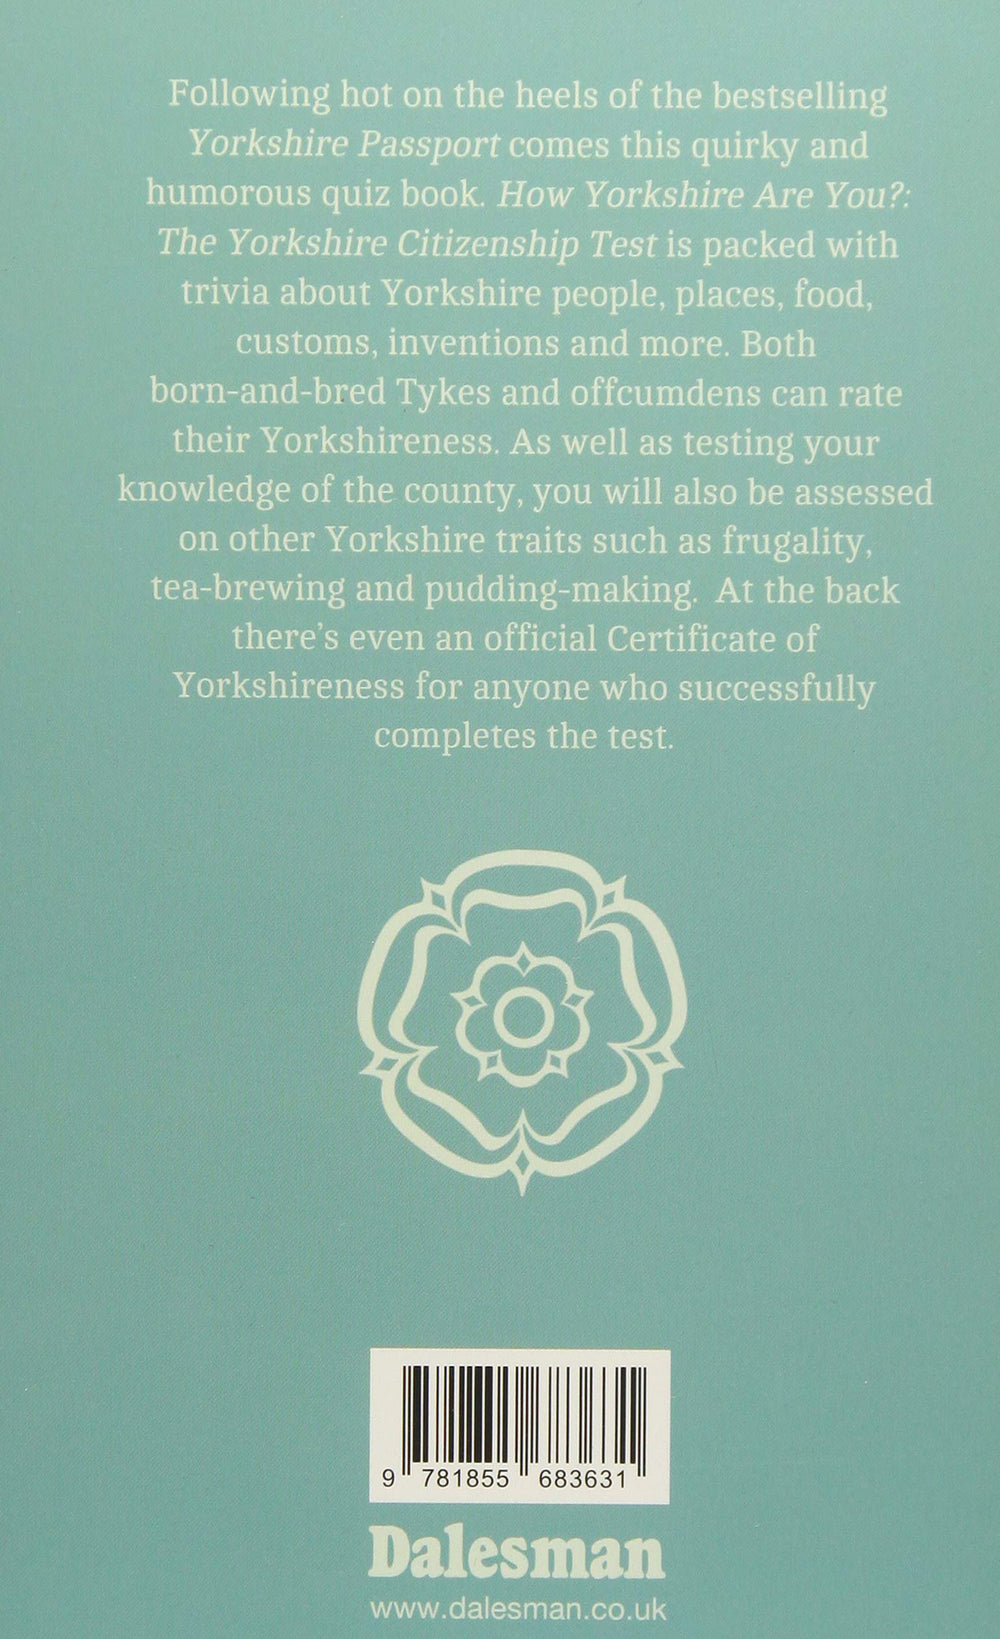 The Yorkshire Citizenship Test